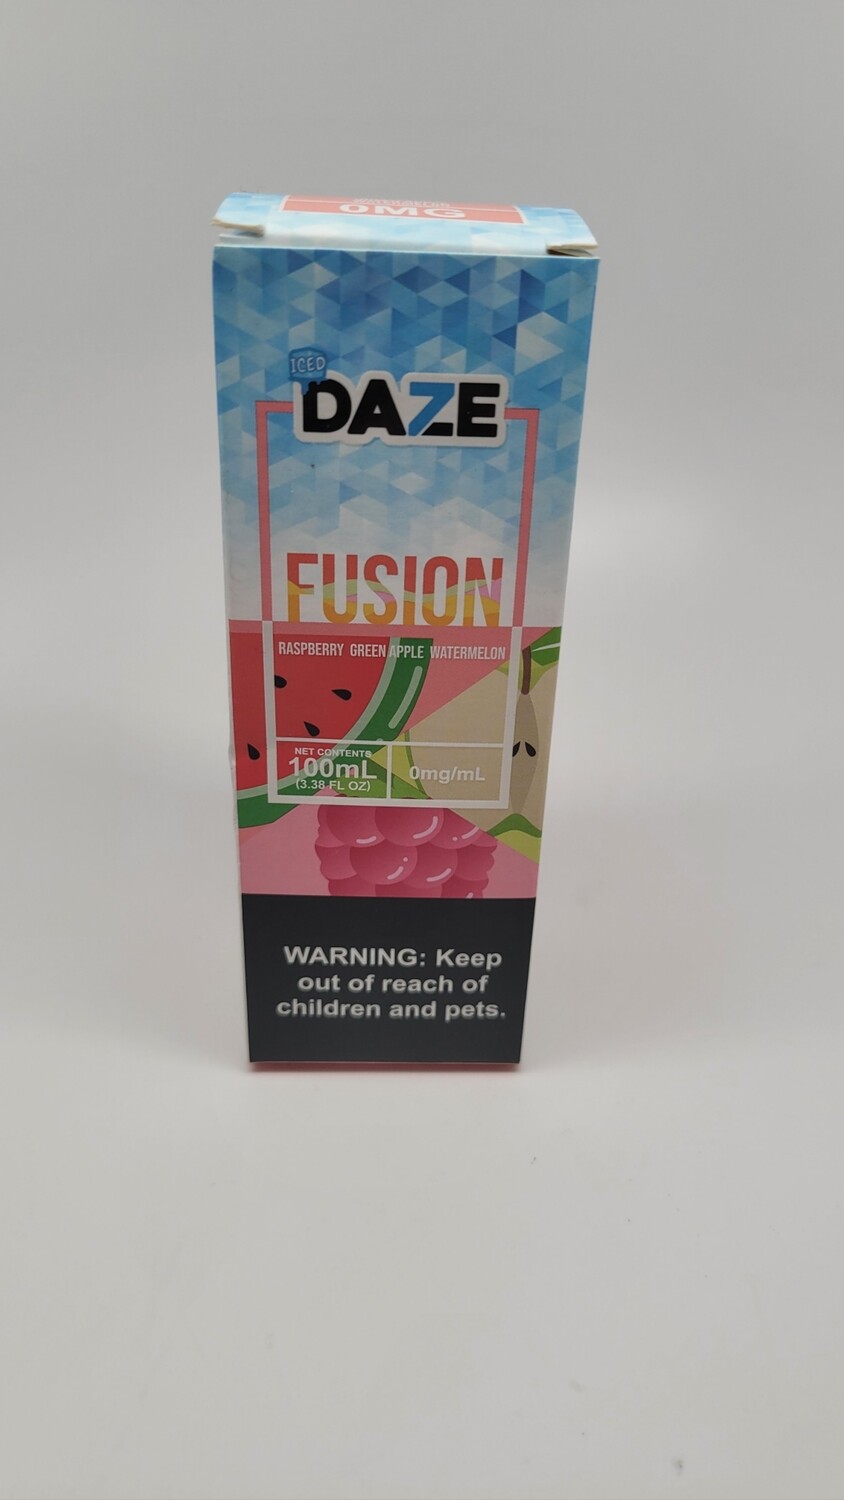 Daze Fusion 100ml Raspberry Green Apple Watermelon iced